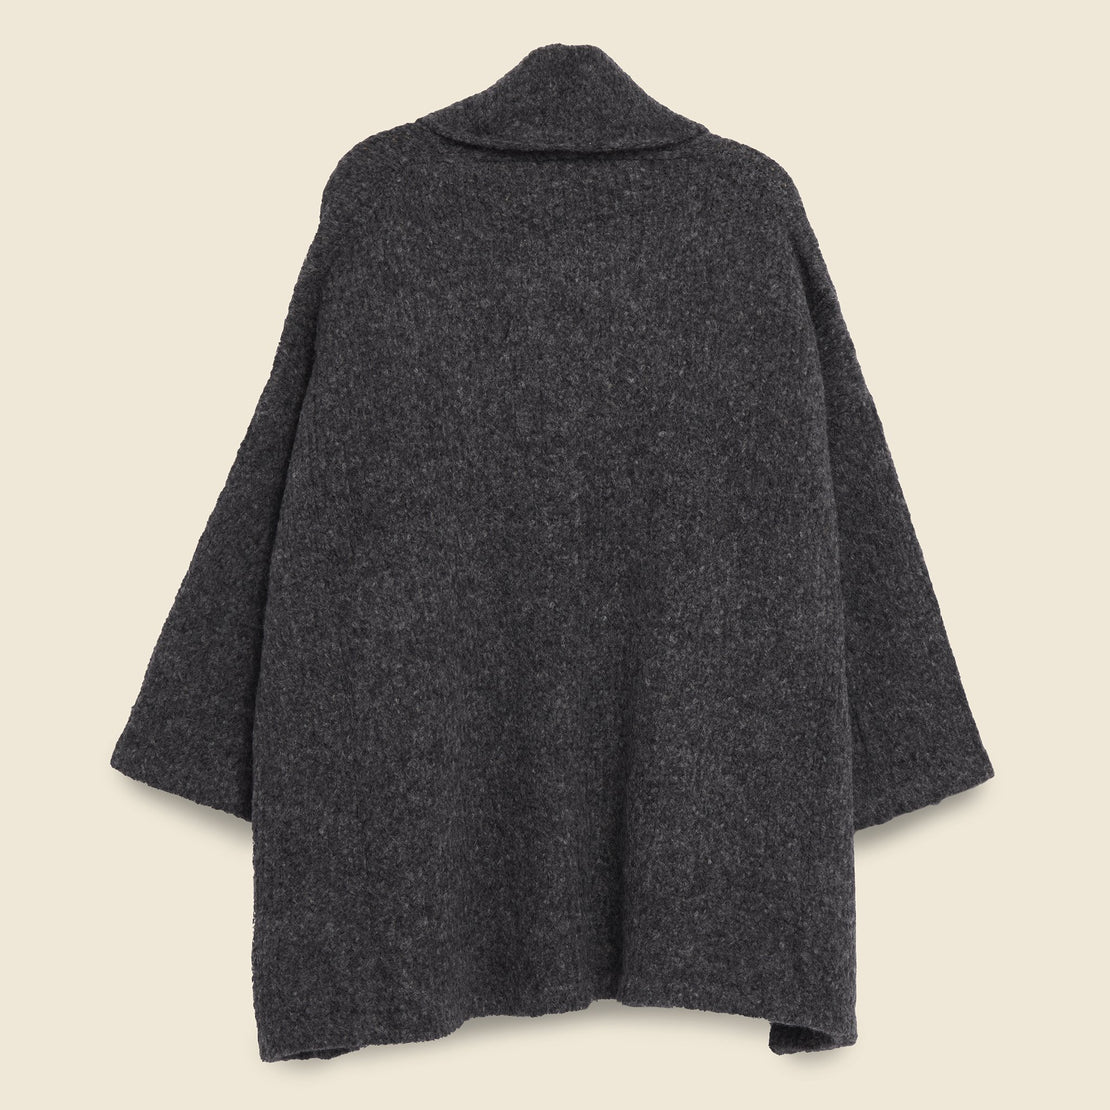 Haori Sweater Coat - Charcoal - Atelier Delphine - STAG Provisions - W - Tops - L/S Knit